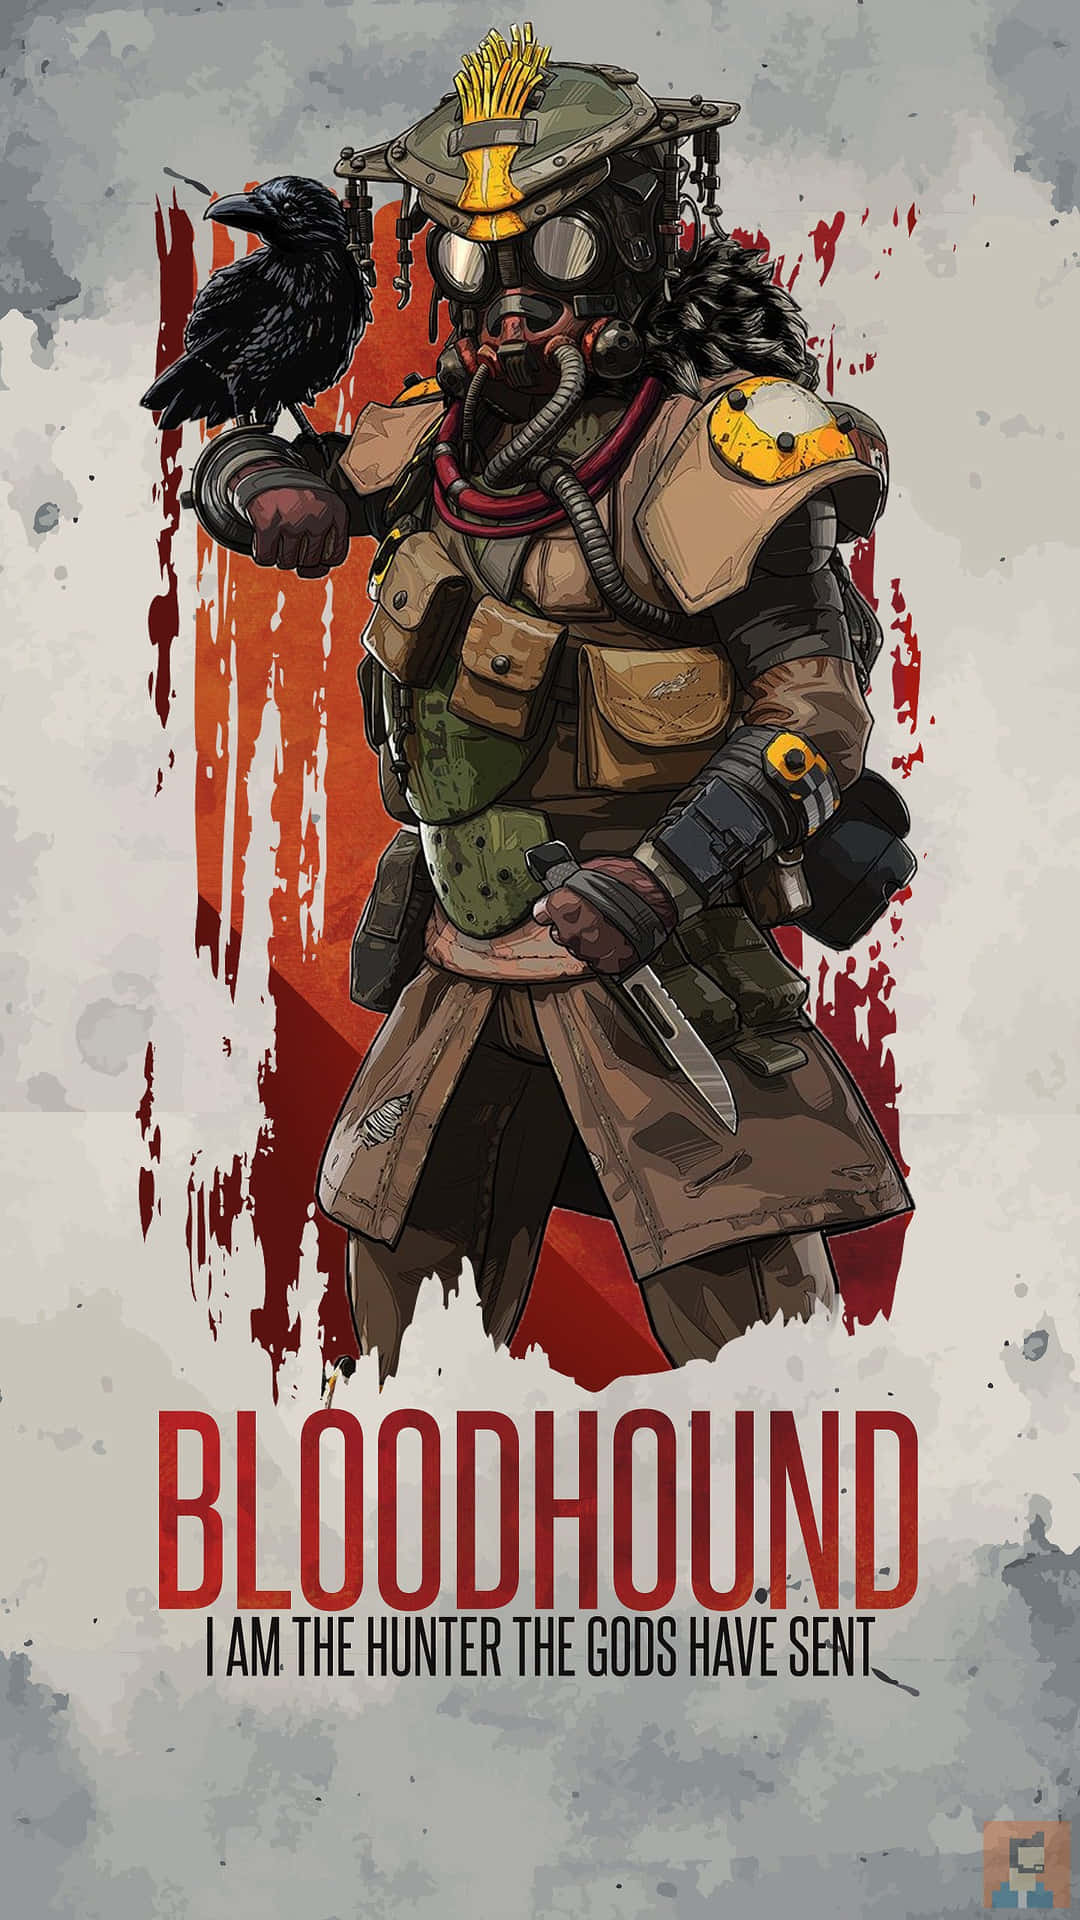 Pixel3 Apex Legends Bloodhound Poster Bakgrundsbild.